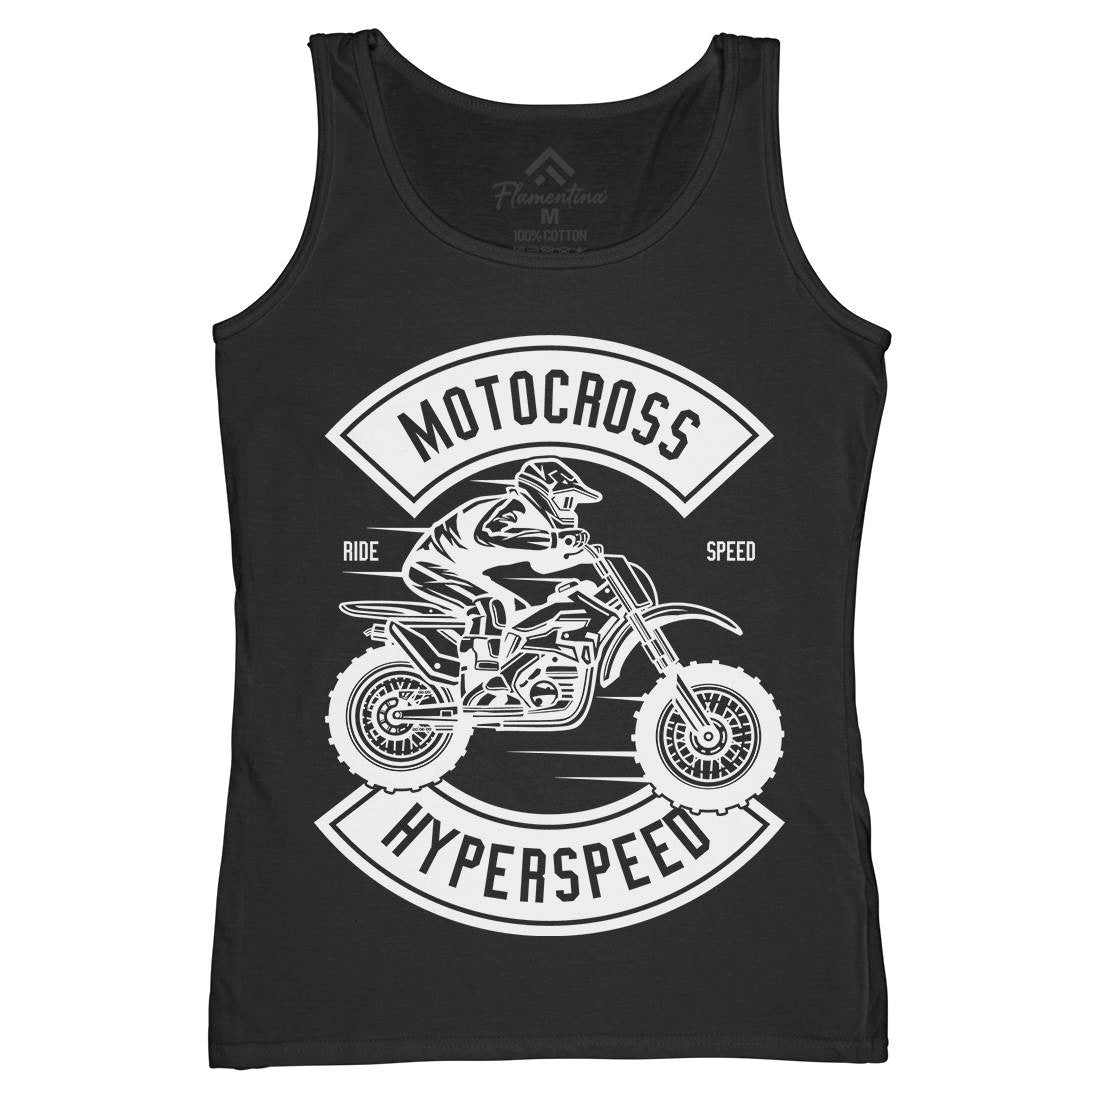 Motocross Hyperspeed Womens Organic Tank Top Vest Motorcycles B577